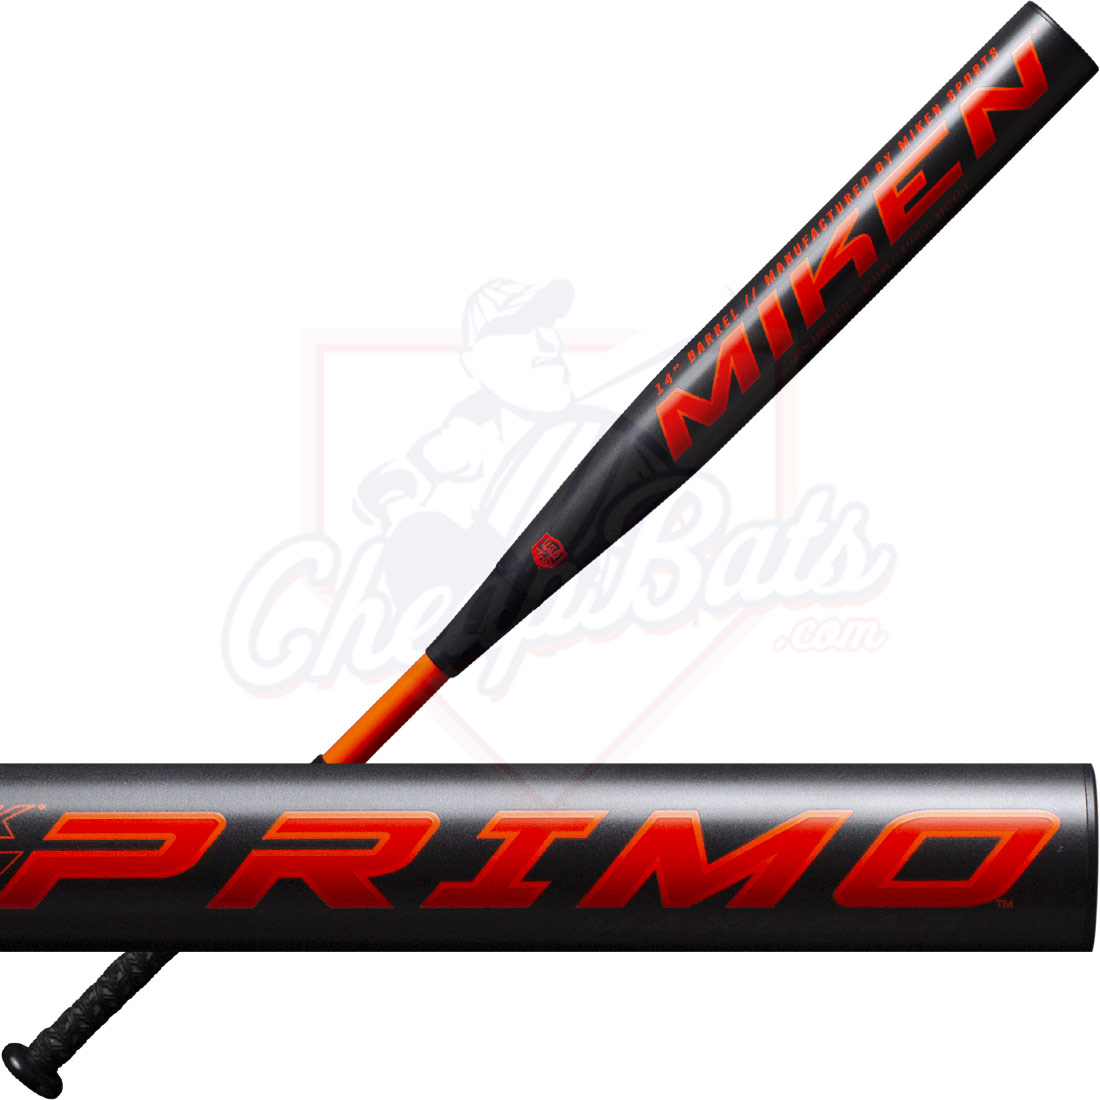 2021 Miken Freak Primo Slowpitch Softball Bat Maxload ASA USA MP21MA